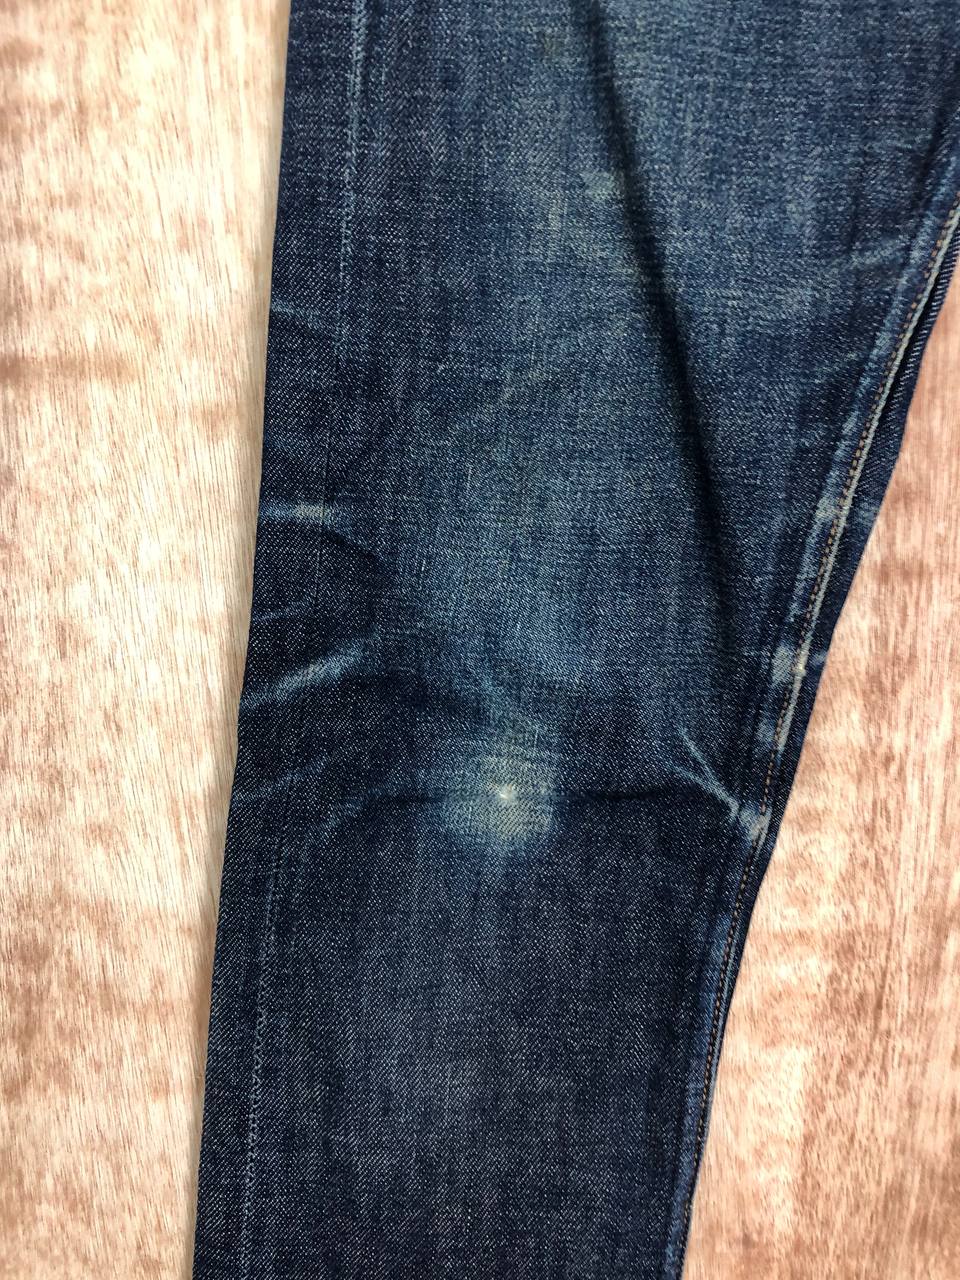 APC Petit Standard Jeans Distressed Selvedge - 7